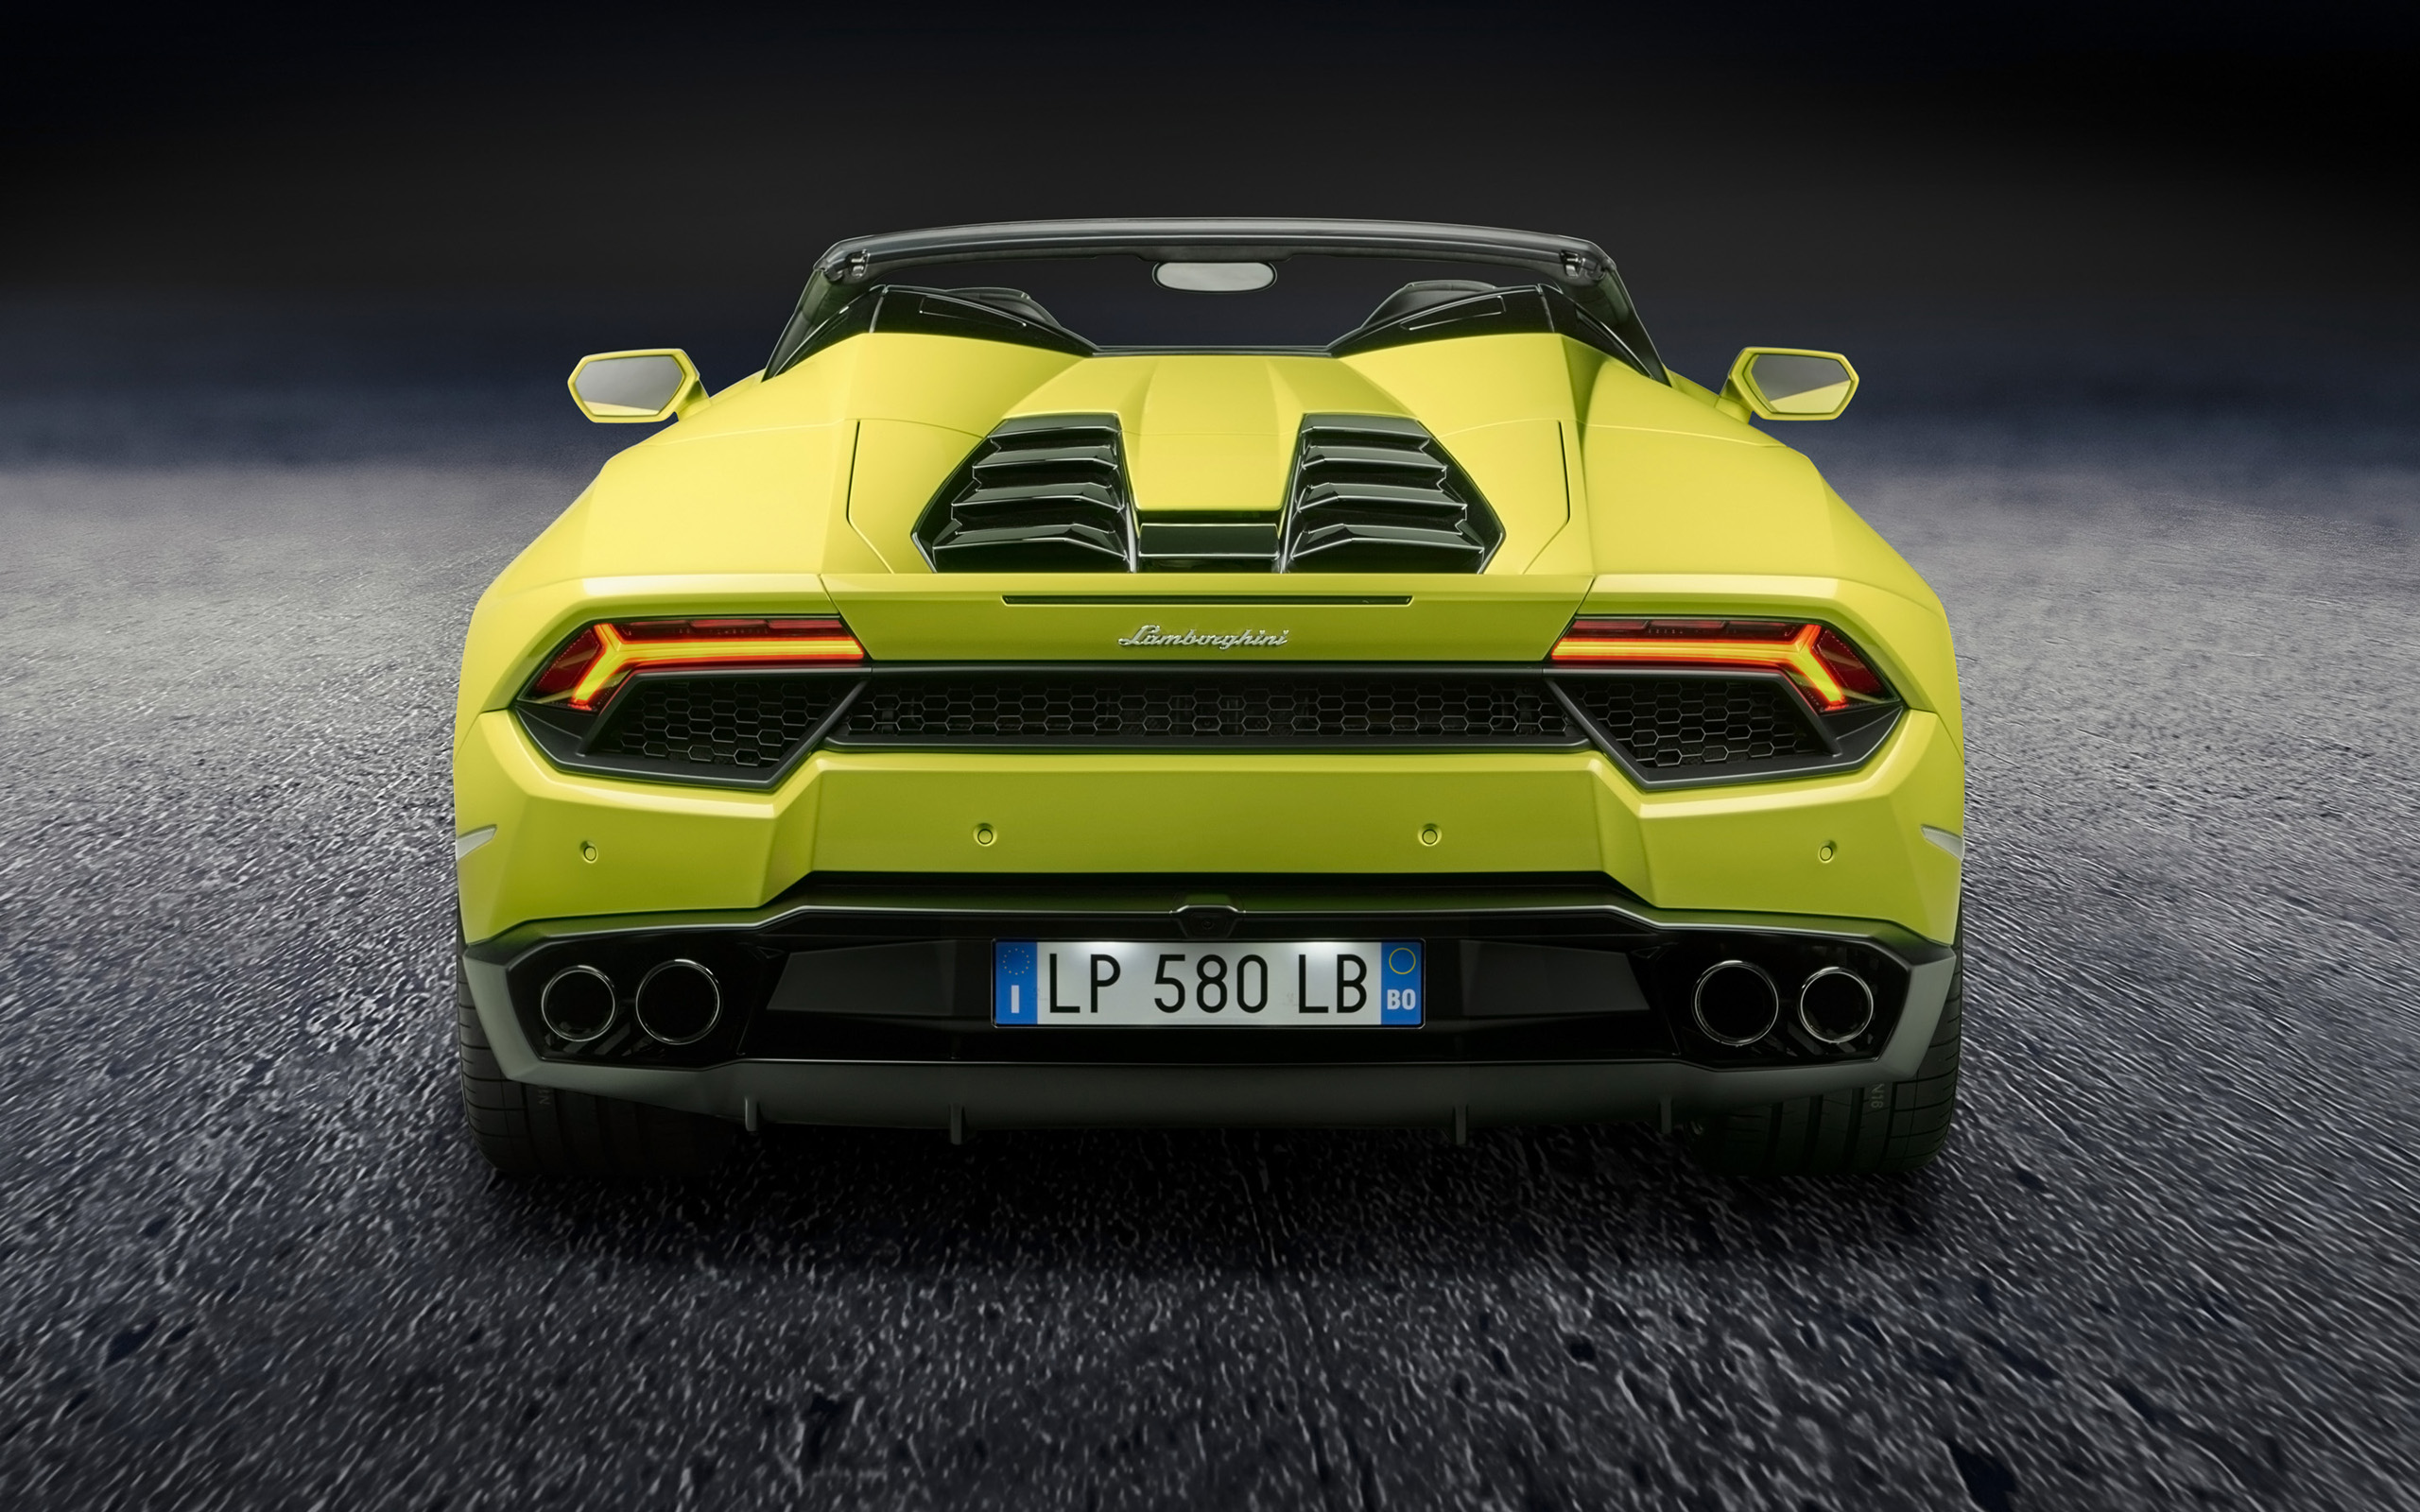 Baixe gratuitamente a imagem Lamborghini, Carro, Super Carro, Veículos, Lamborghini Huracán, Lamborghini Huracan Rwd Spyder na área de trabalho do seu PC